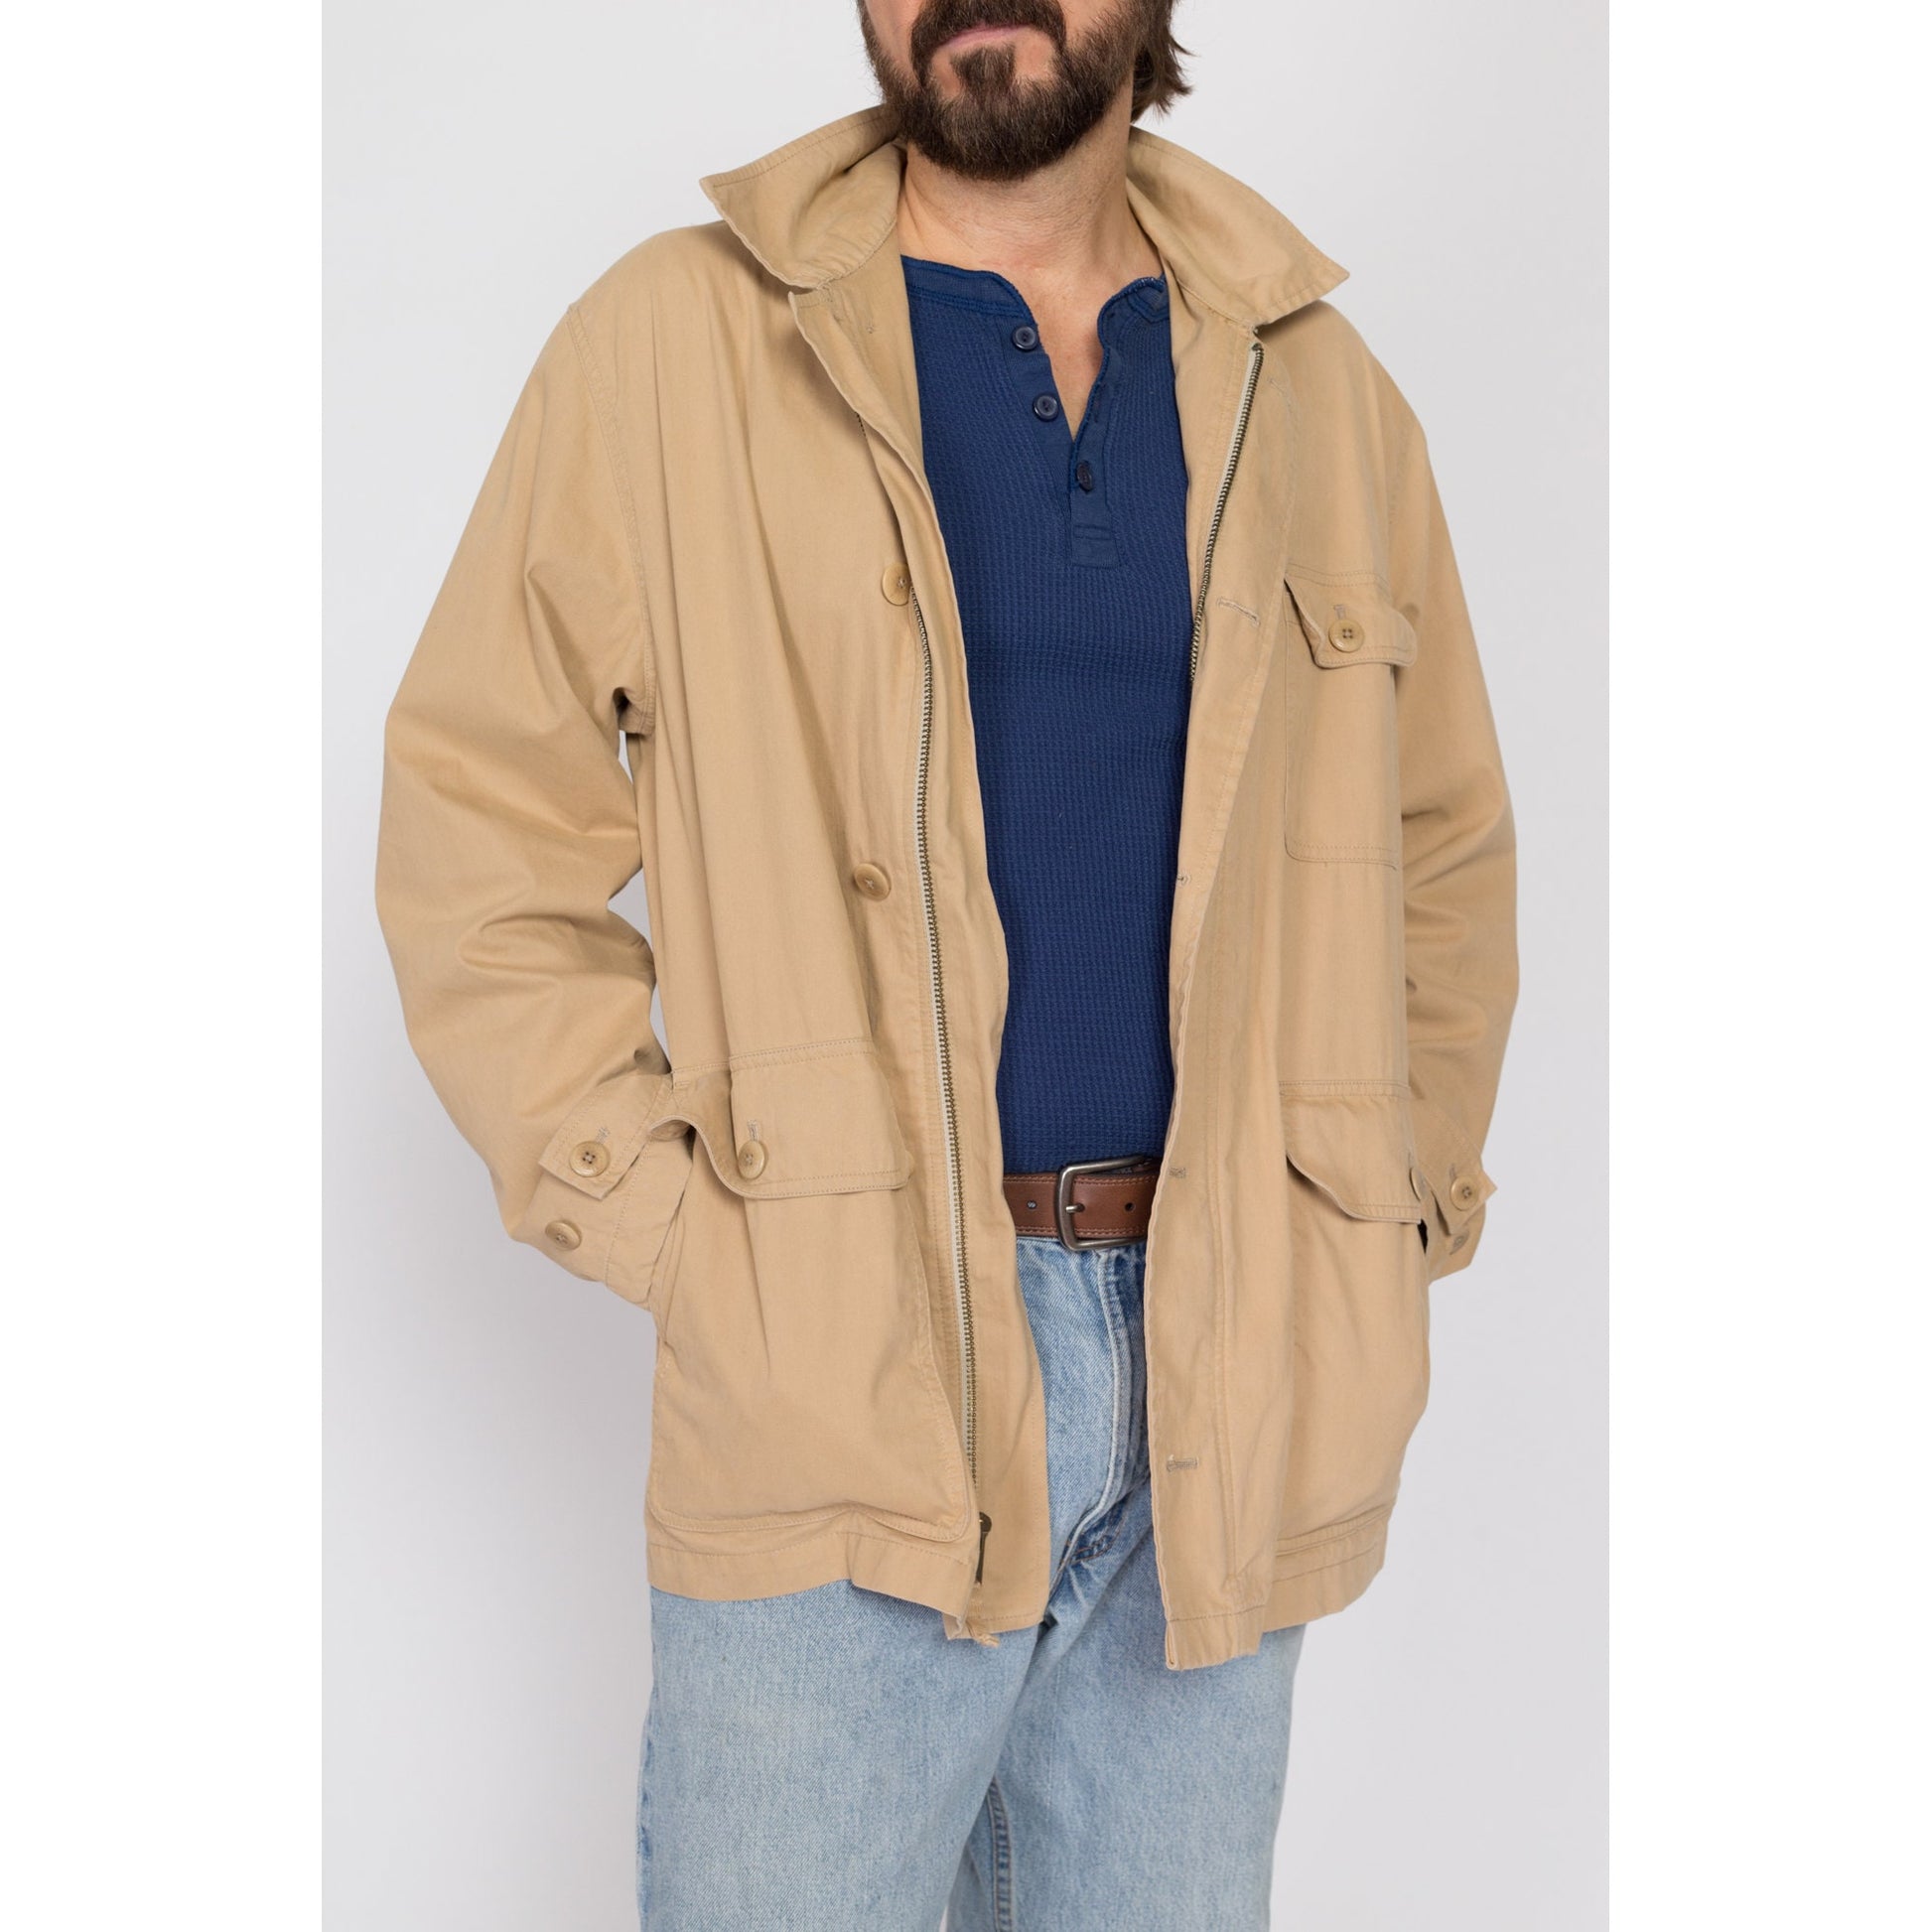 Medium 90s Polo Ralph Lauren Khaki Chore Coat | Vintage Tan Button Up Lightweight Field Jacket